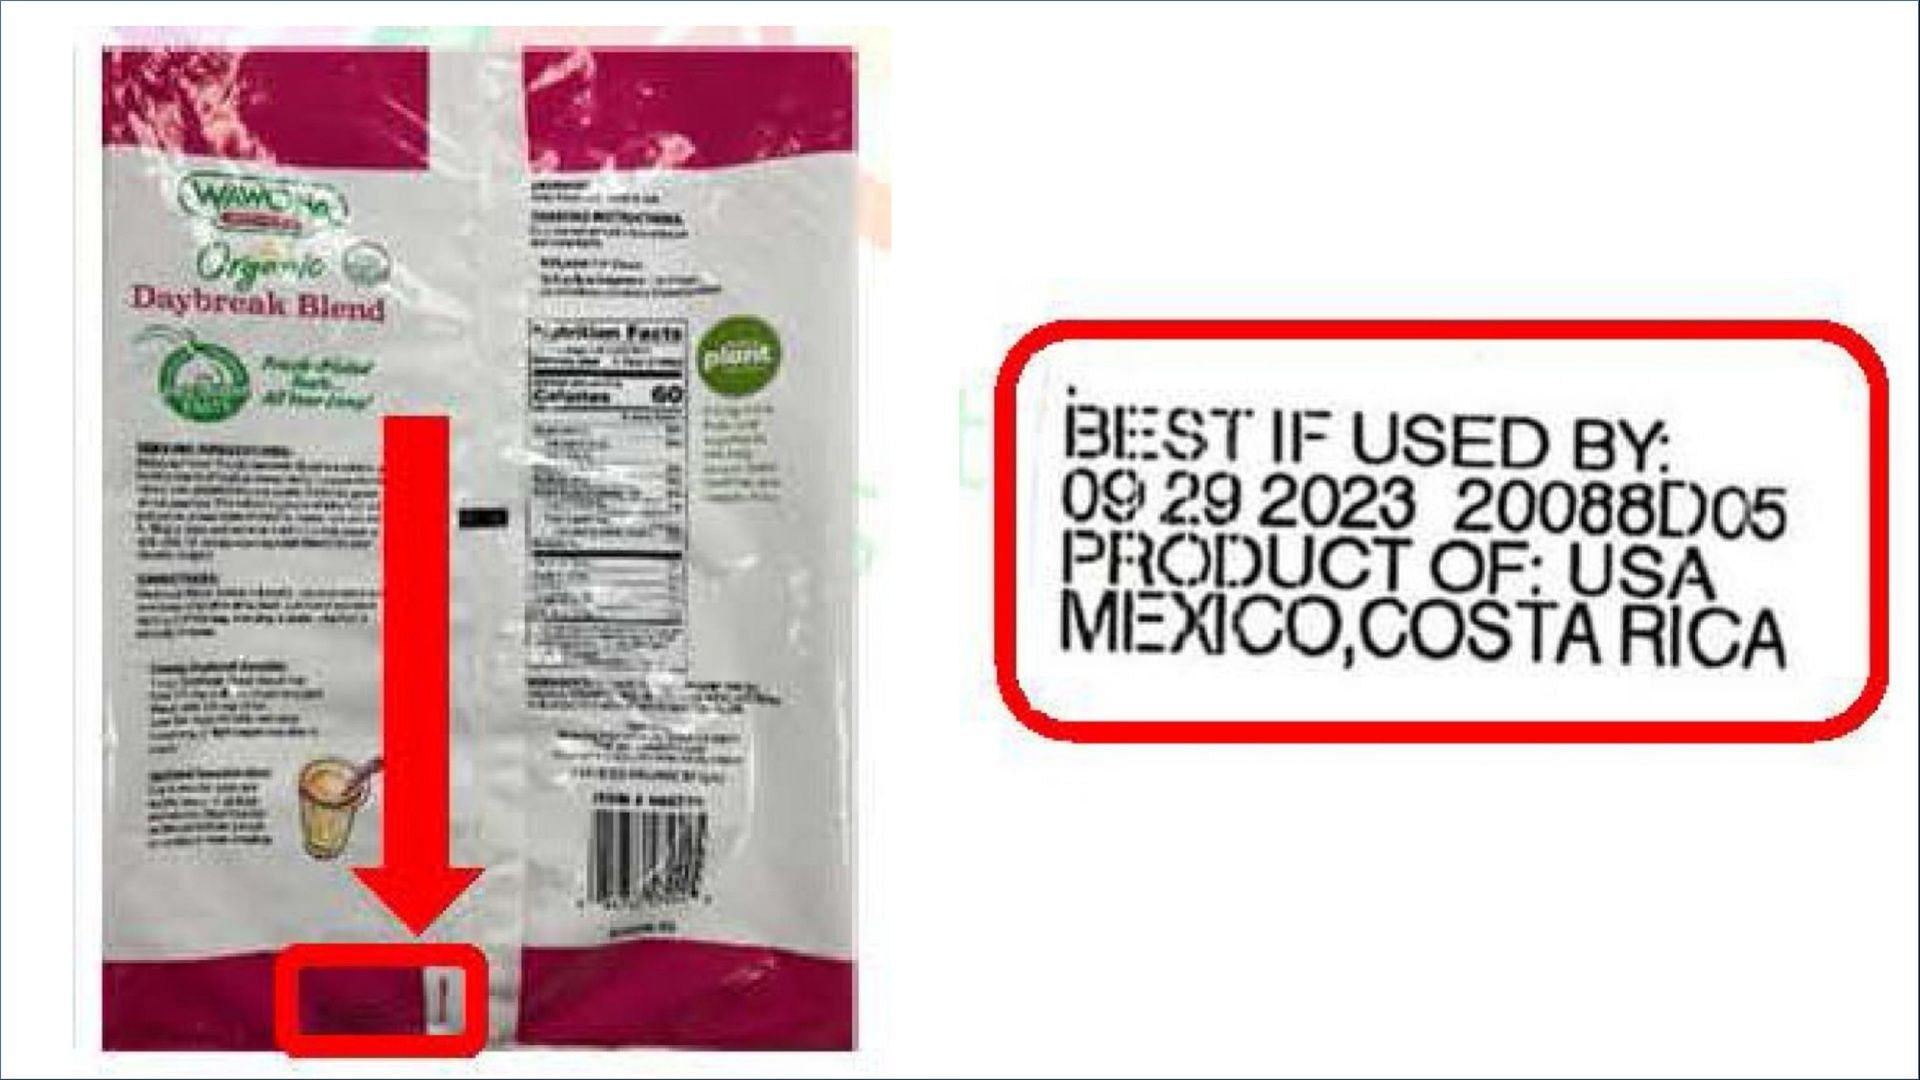 The recalled packet of Wawona Organic DayBreak Blend (Image via FDA)